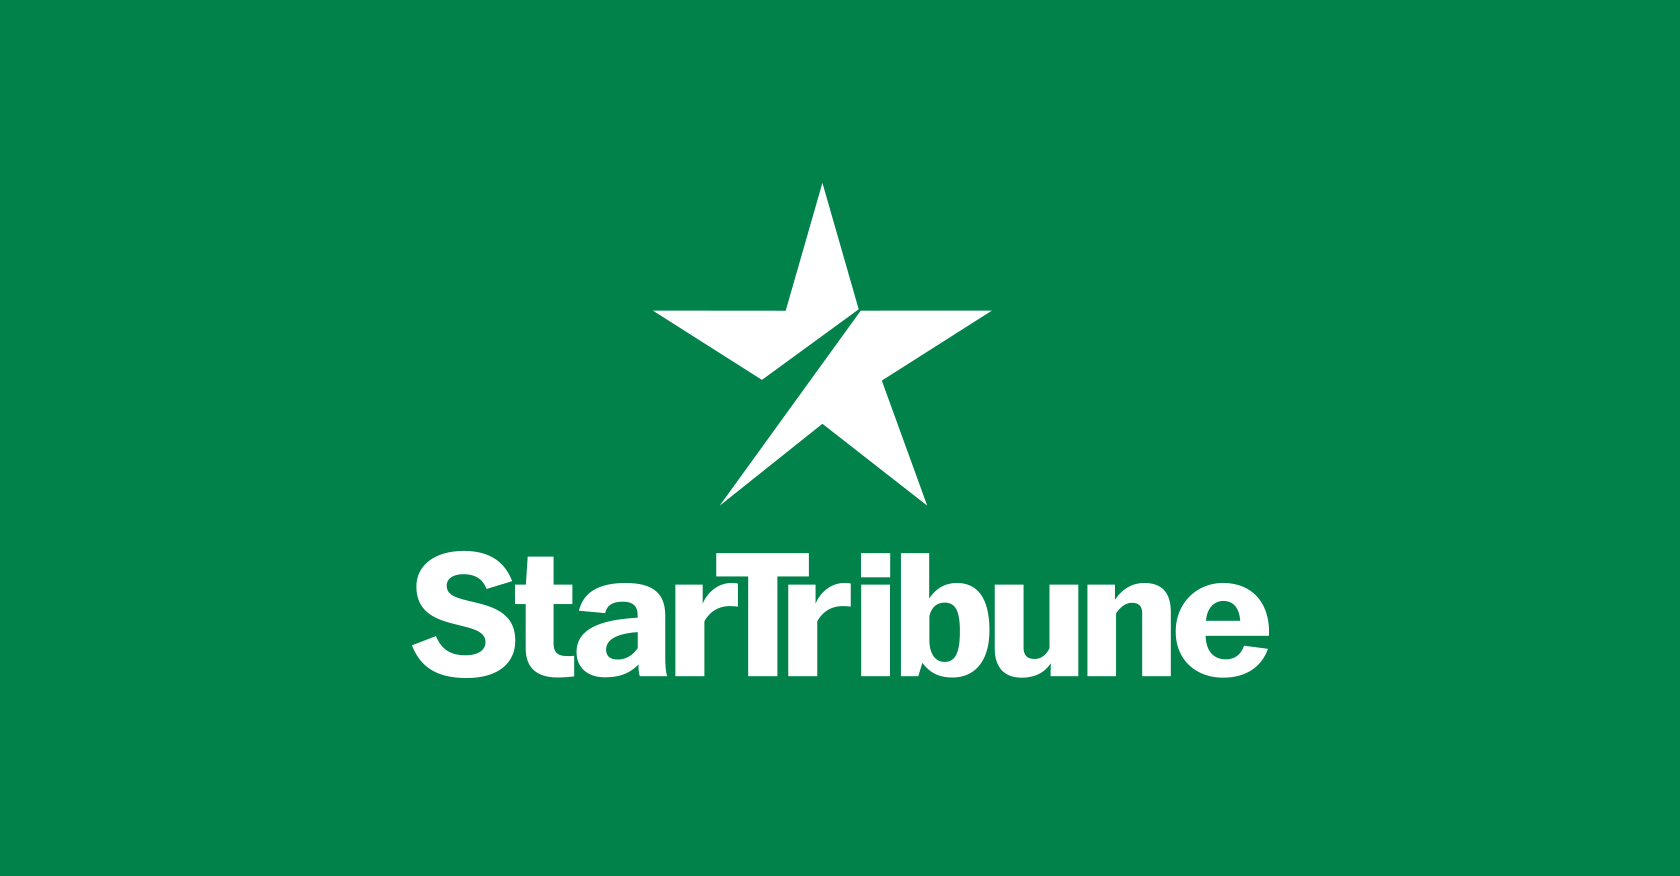 Don't rush, take time to manage your time - Minneapolis Star Tribune